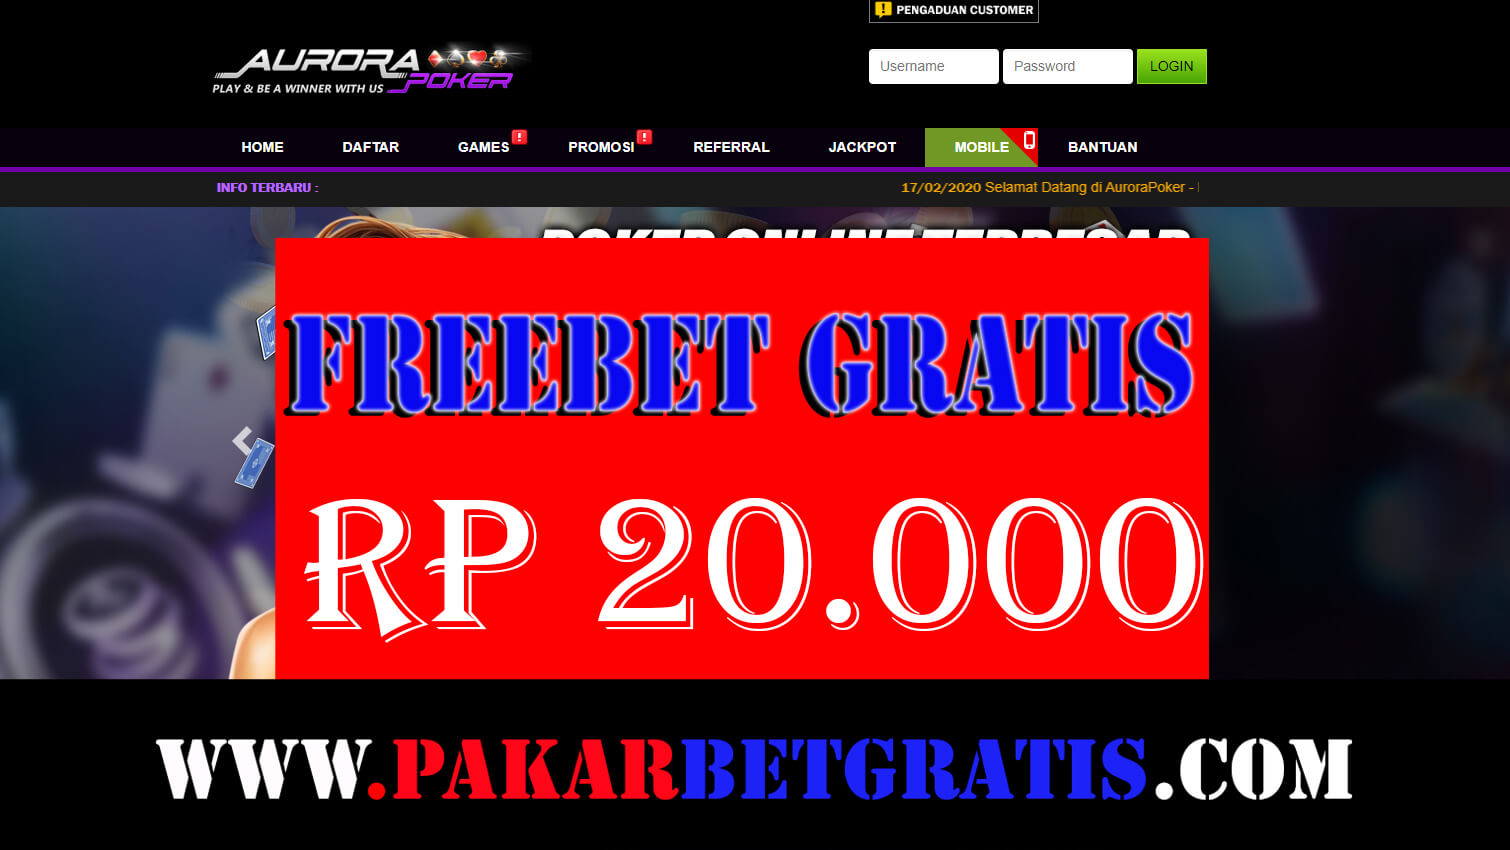 Freebet gratis aurorapoker rp 20.000